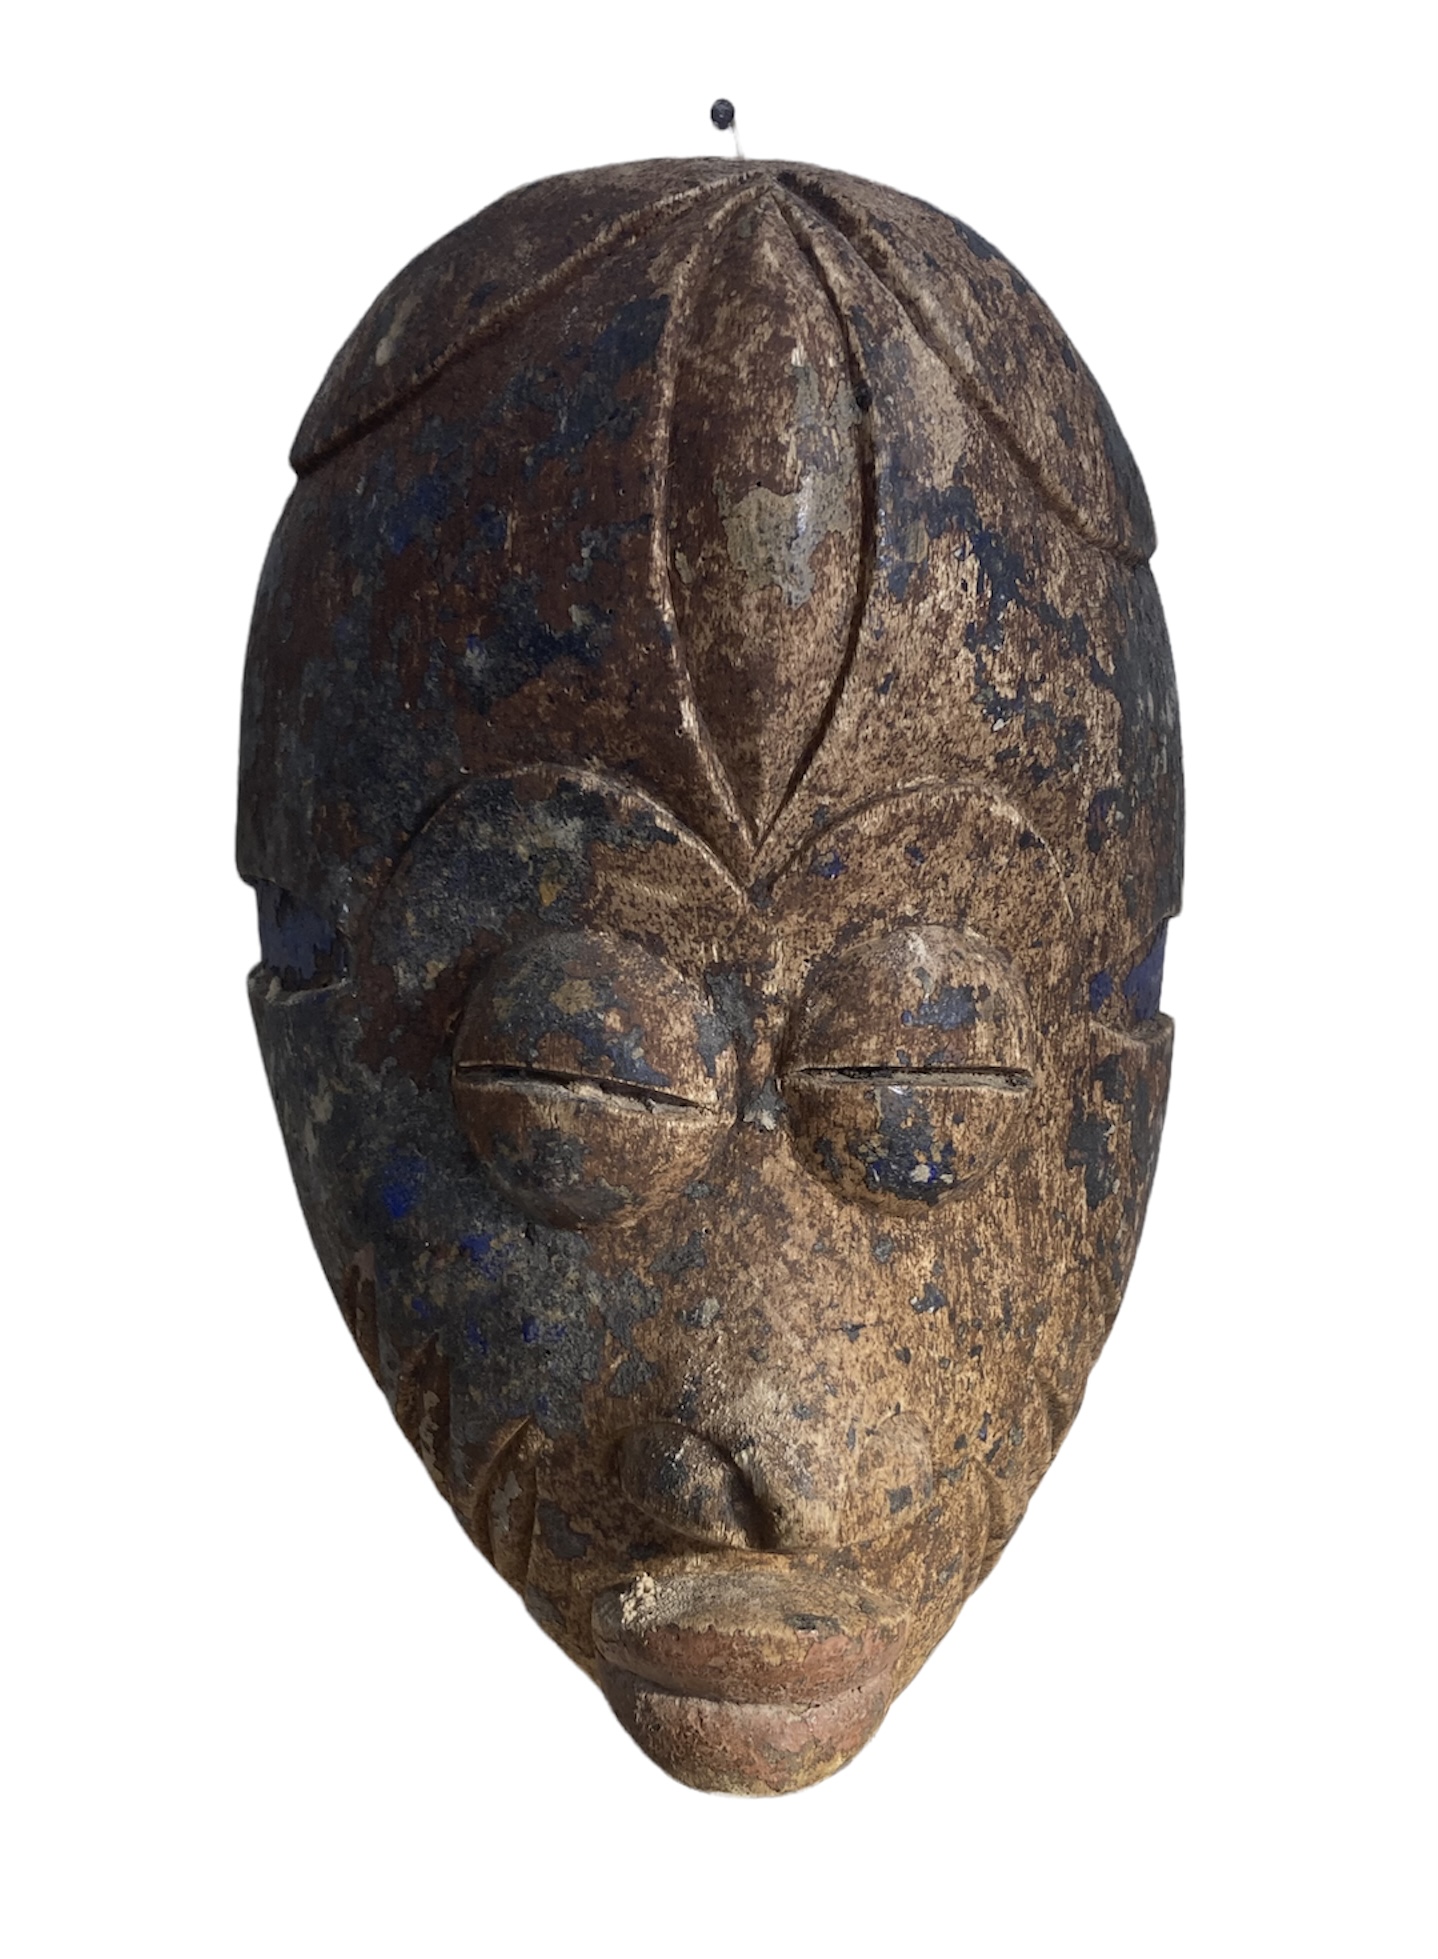 Yoruba Mask from Nigeria